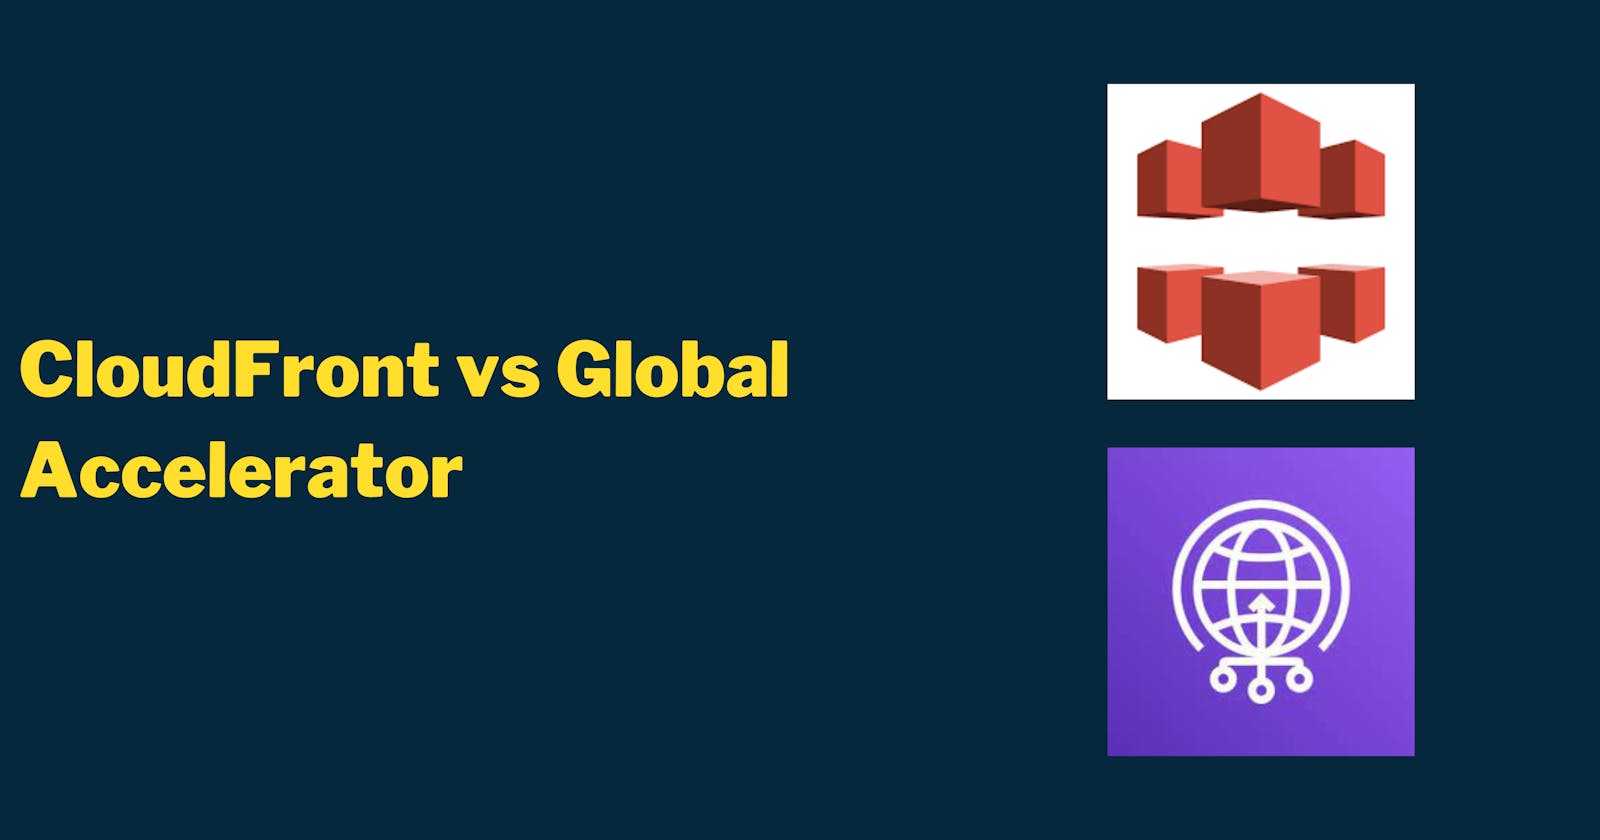 CloudFront vs Global Accelerator